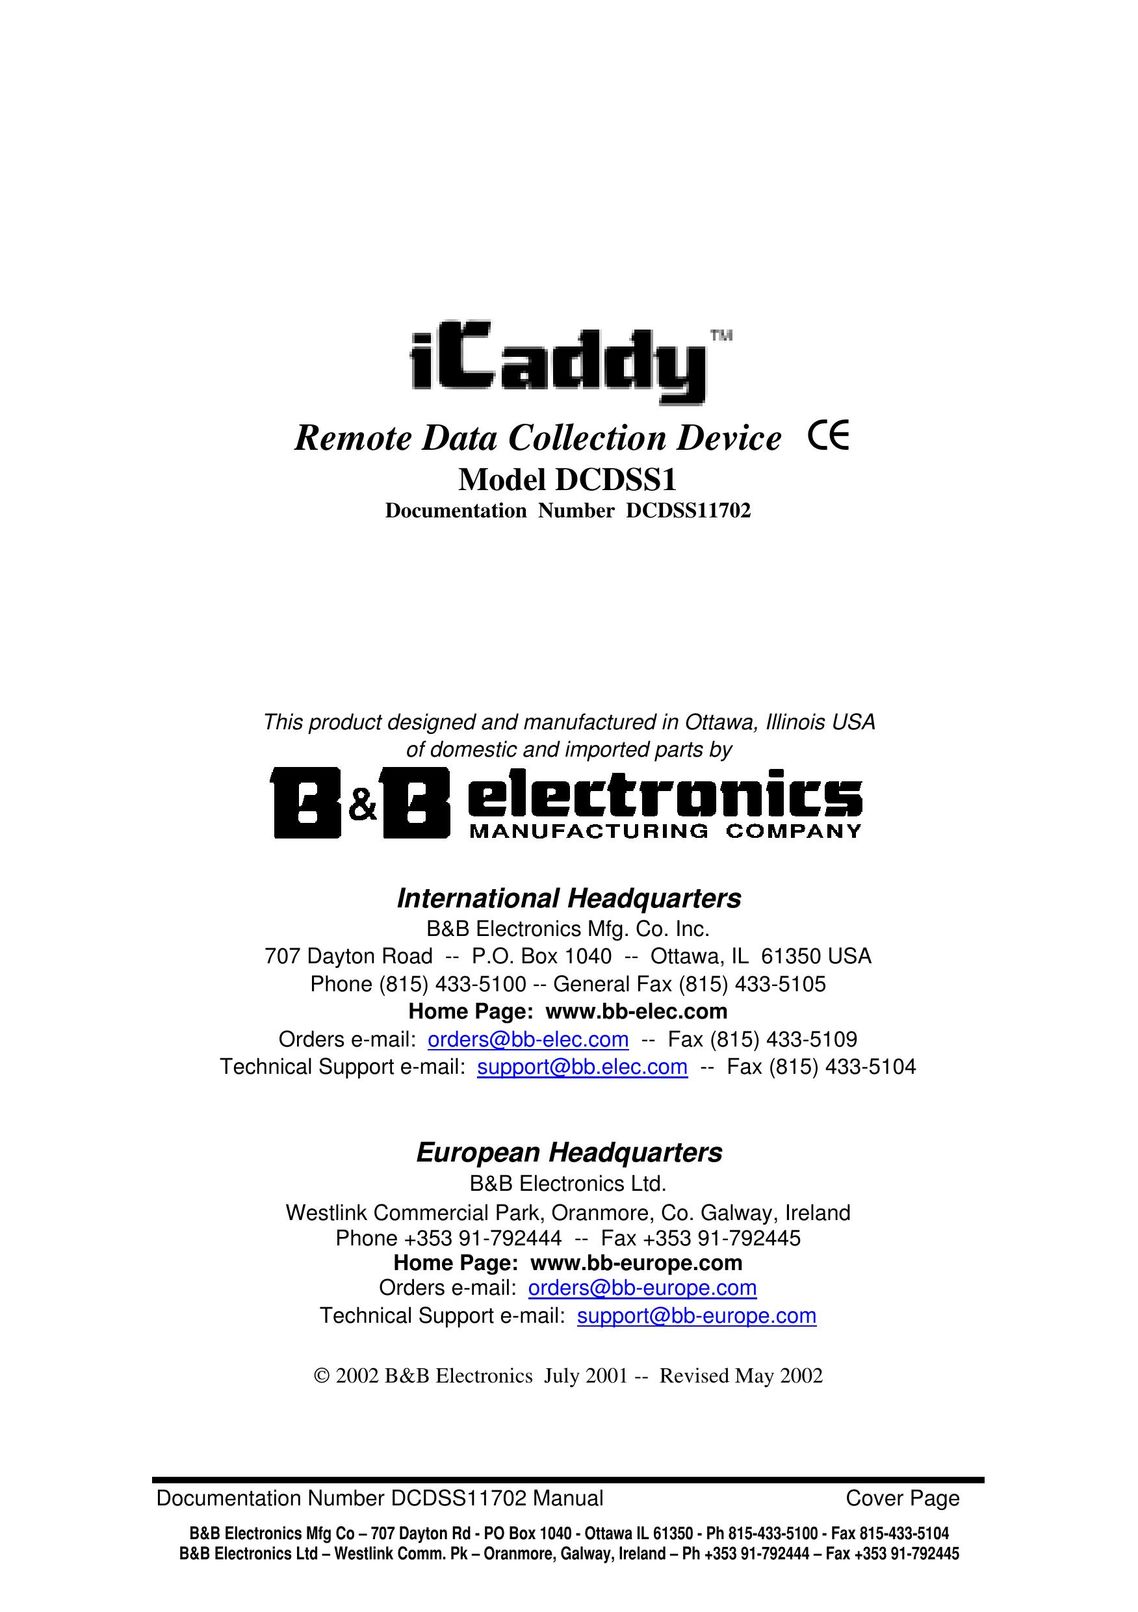 B&B Electronics DCDSS1 Network Card User Manual